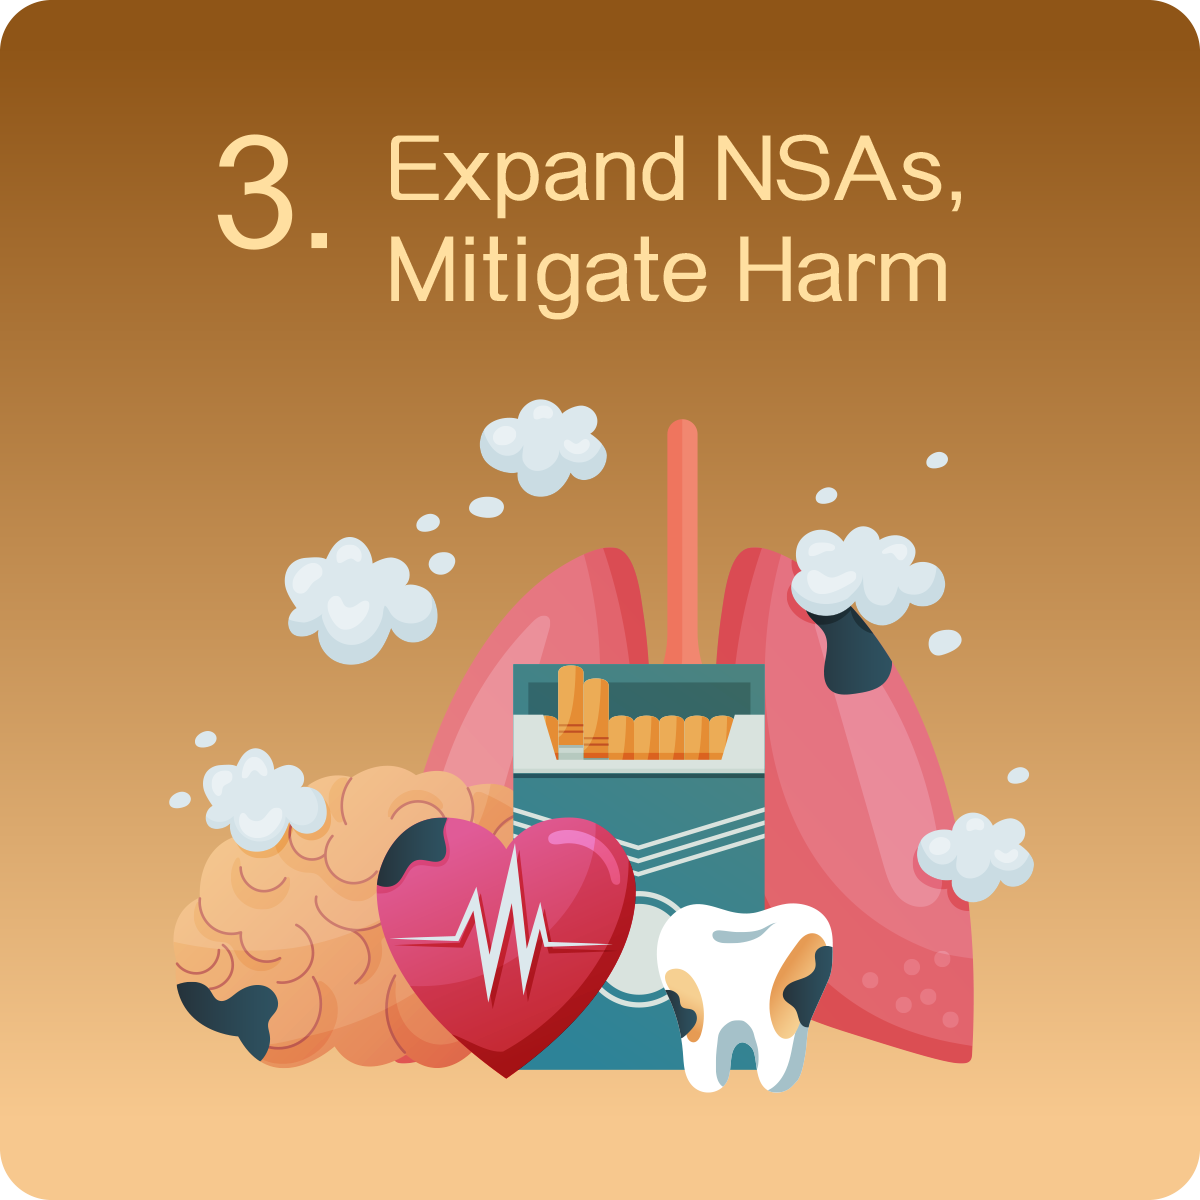 Expand NSAs, Mitigate Harm